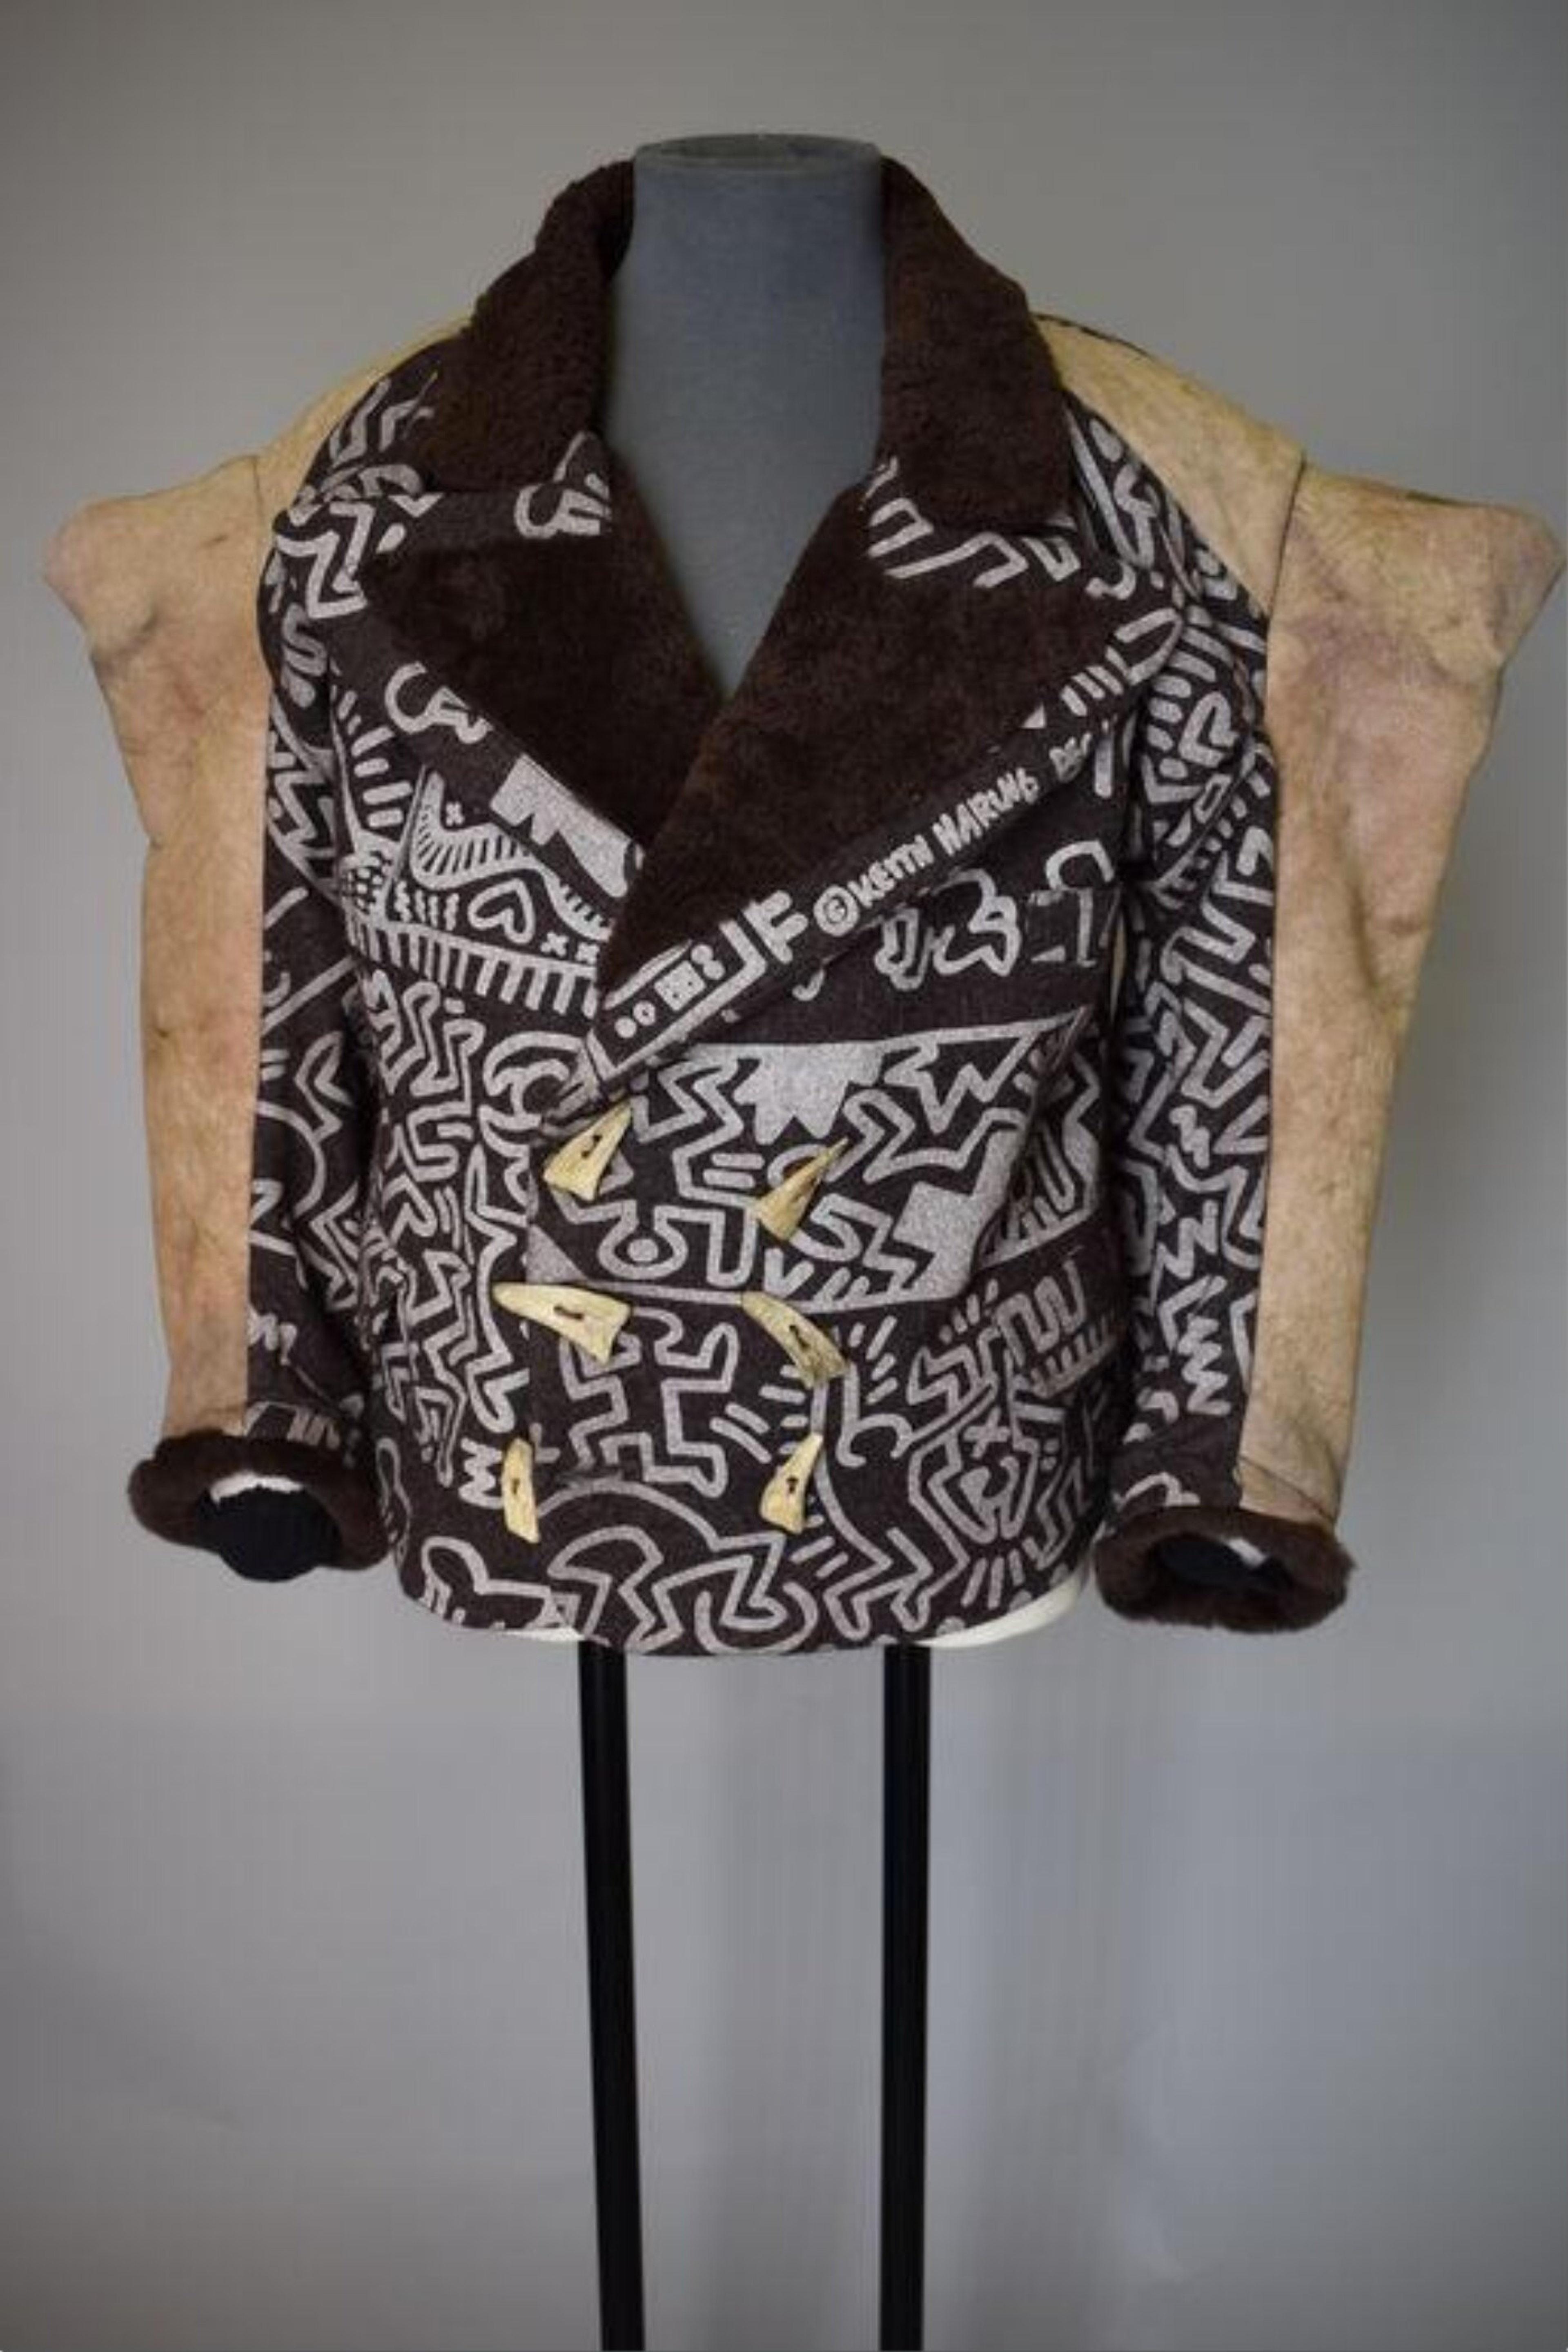 Man's jacket made of printed sheepskin, print designed by Keith Haring, jacket designed by Vivienne Westwood.